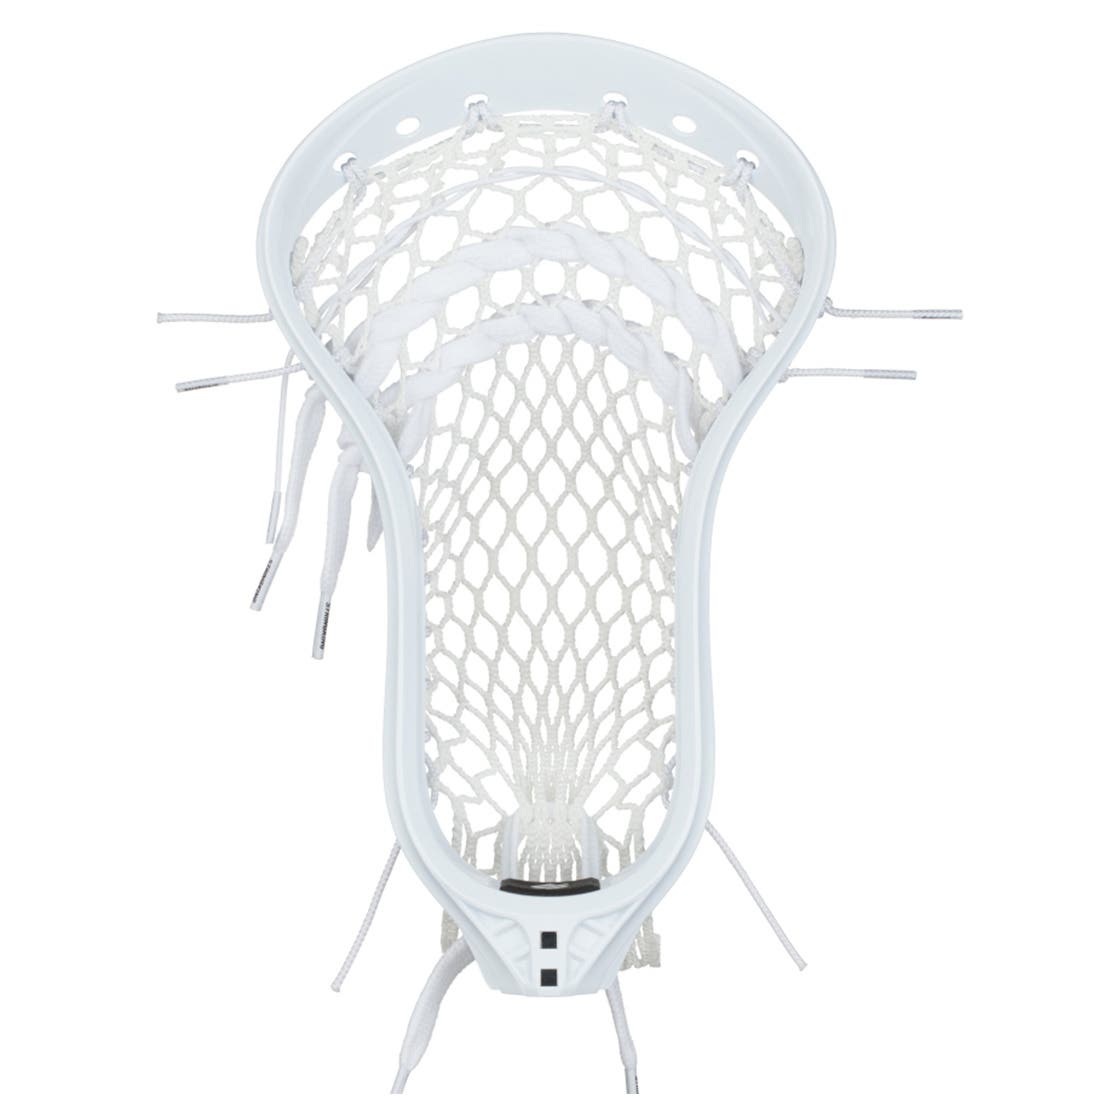 Stringking Mark 2F Lacrosse Head-Strung | Lacrosse Unlimited